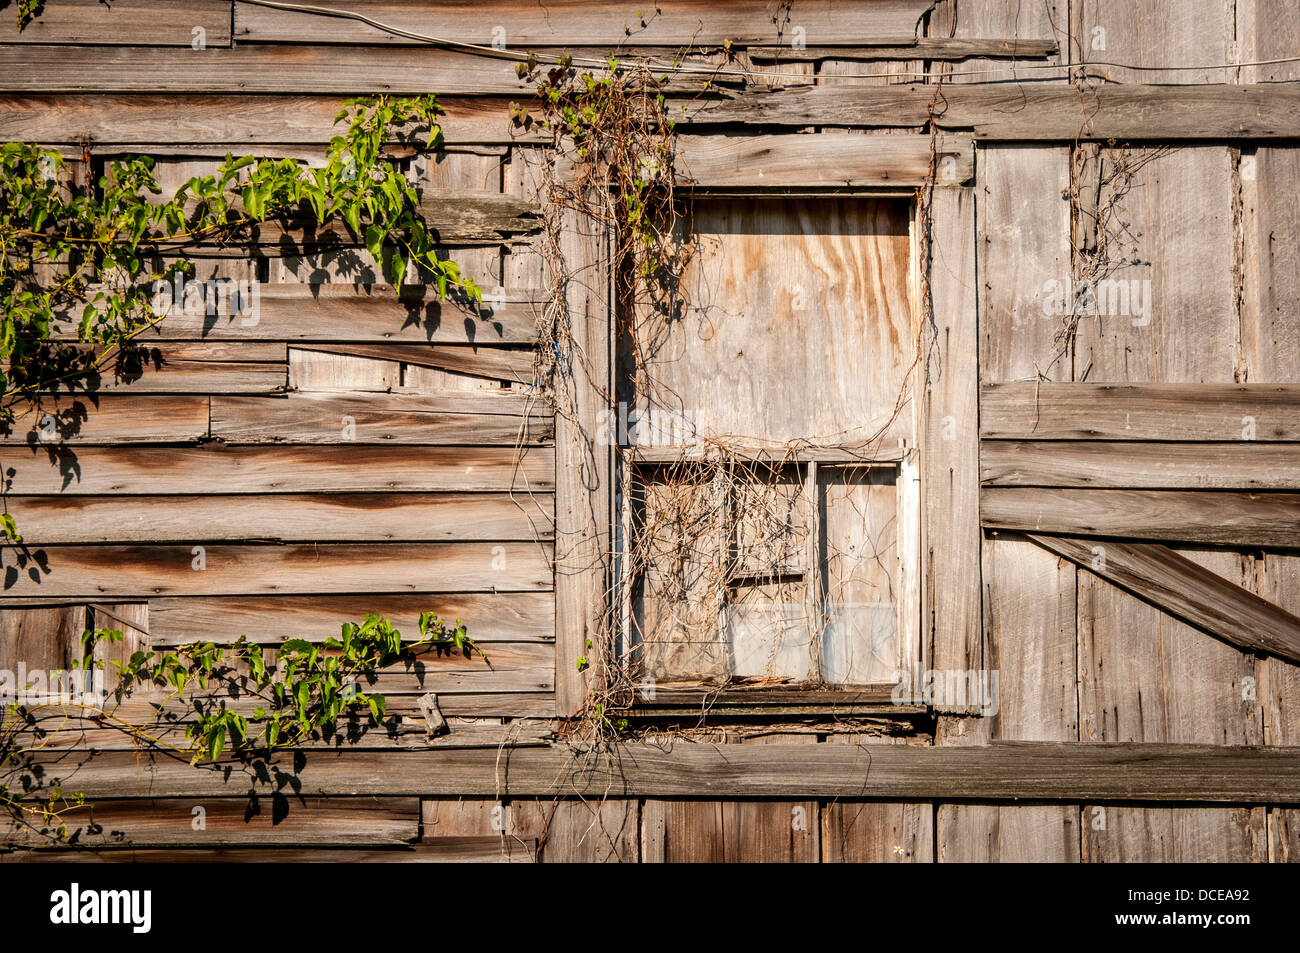 USA, Louisiana, Atchafalaya Basin, Plaquemine, boarded up window of abandoned clapboard house. Stock Photo